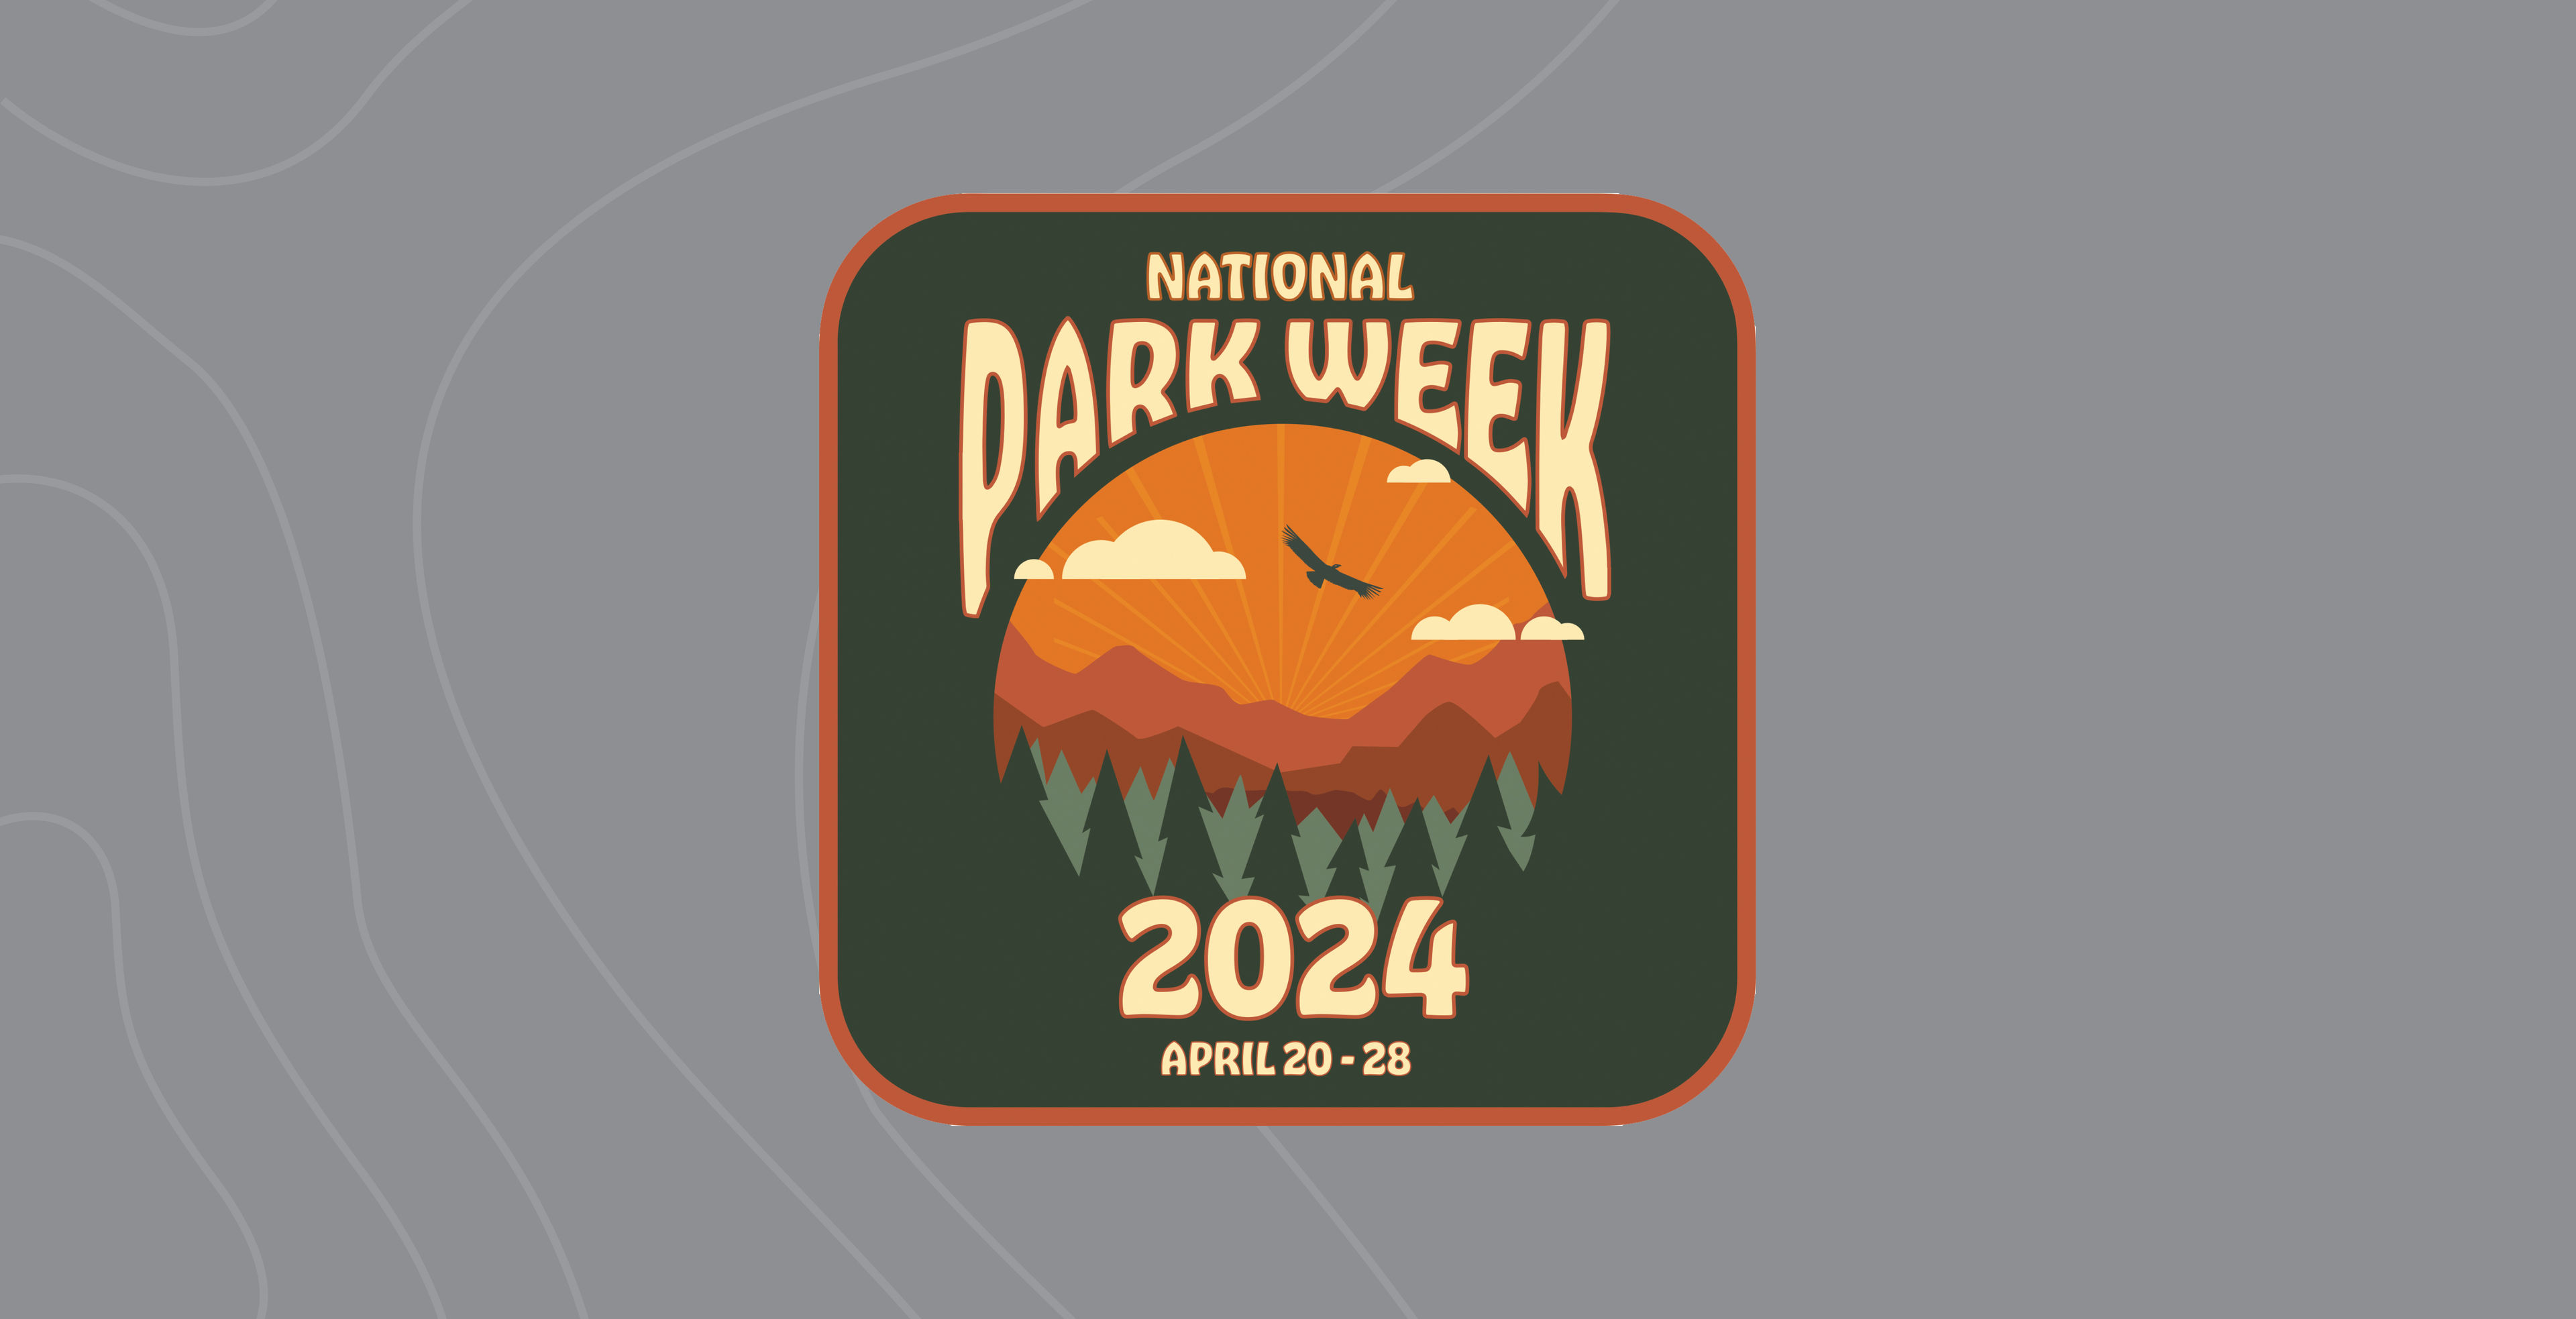 The National Park Week 2024 logo.